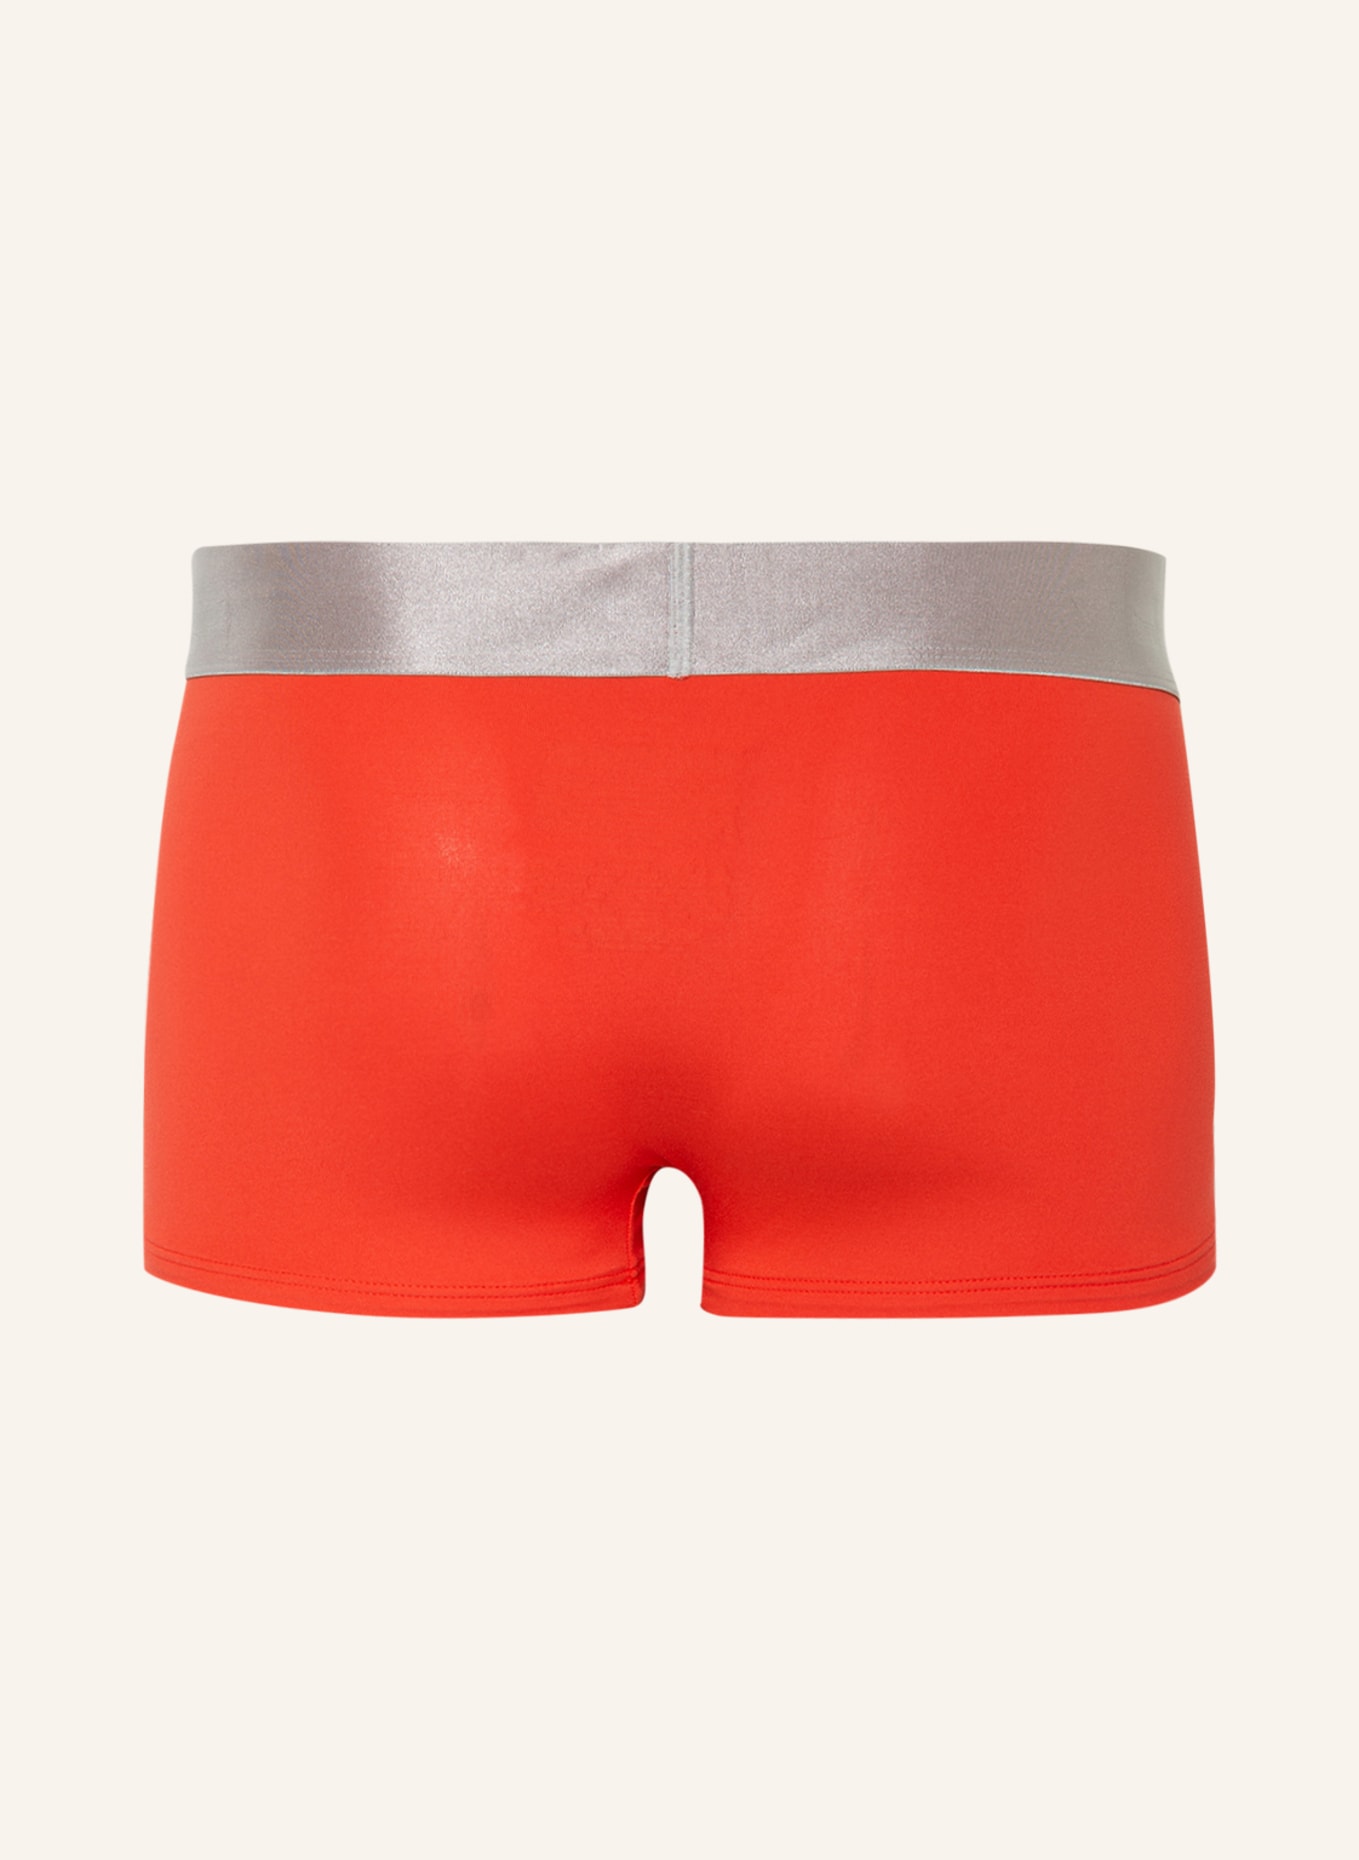 Calvin Klein 3-pack boxer shorts MODERN COTTON